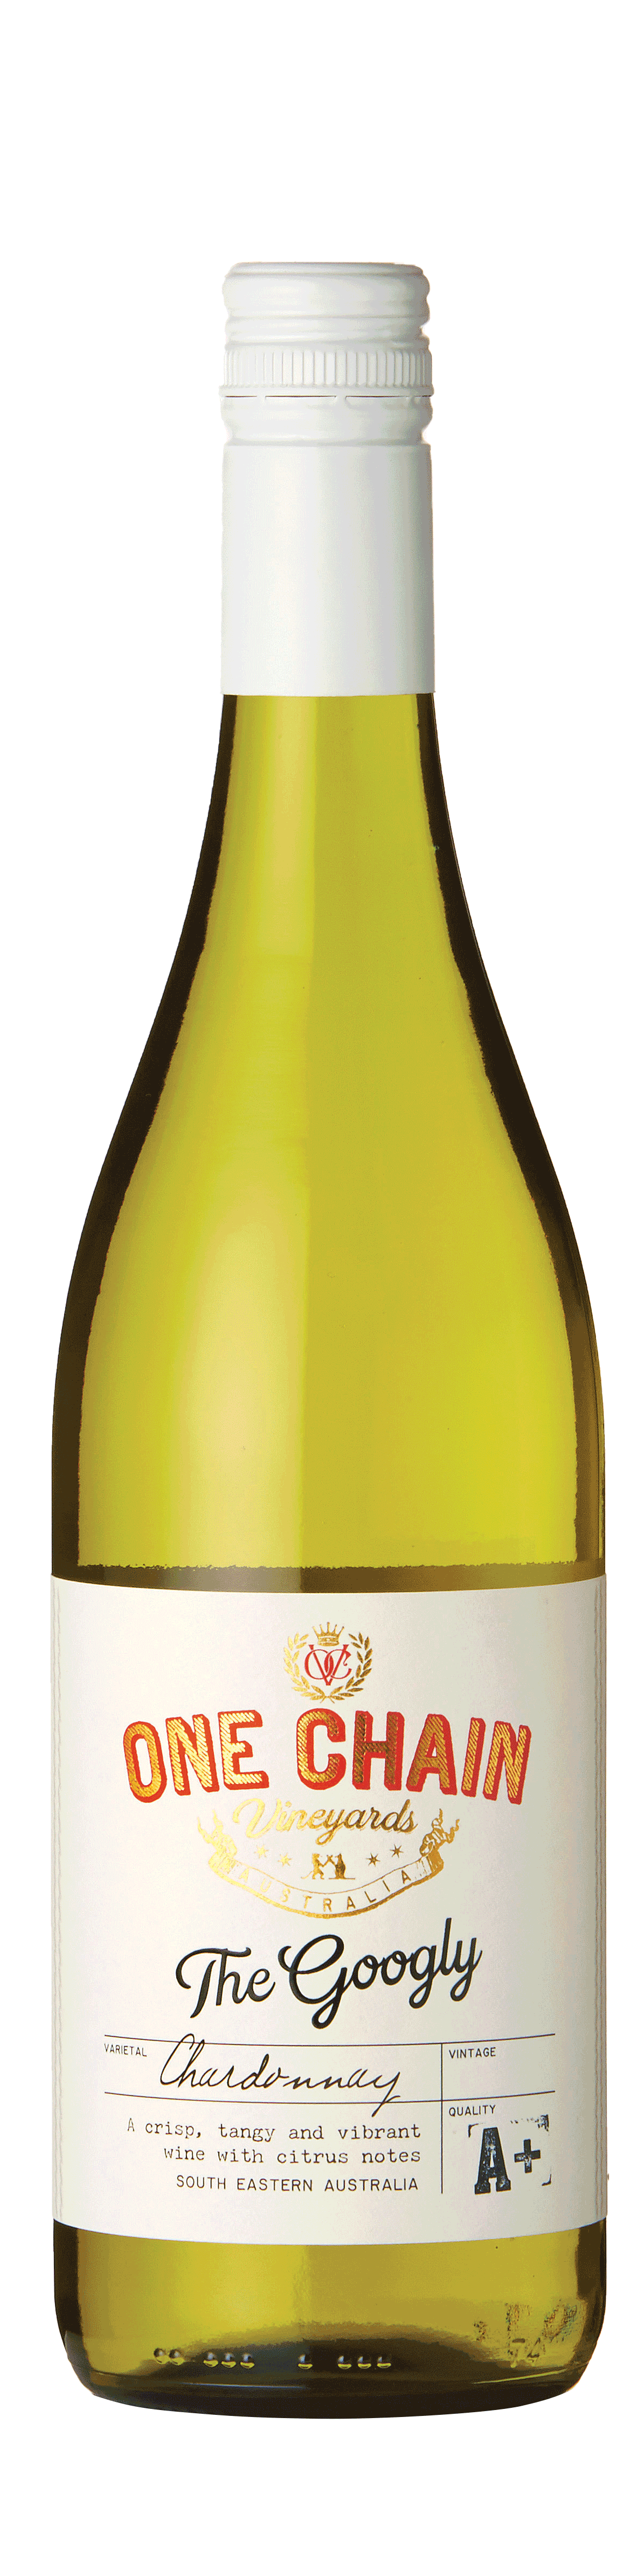 Bottle shot - One Chain Vineyards, The Googly Chardonnay, South Australia